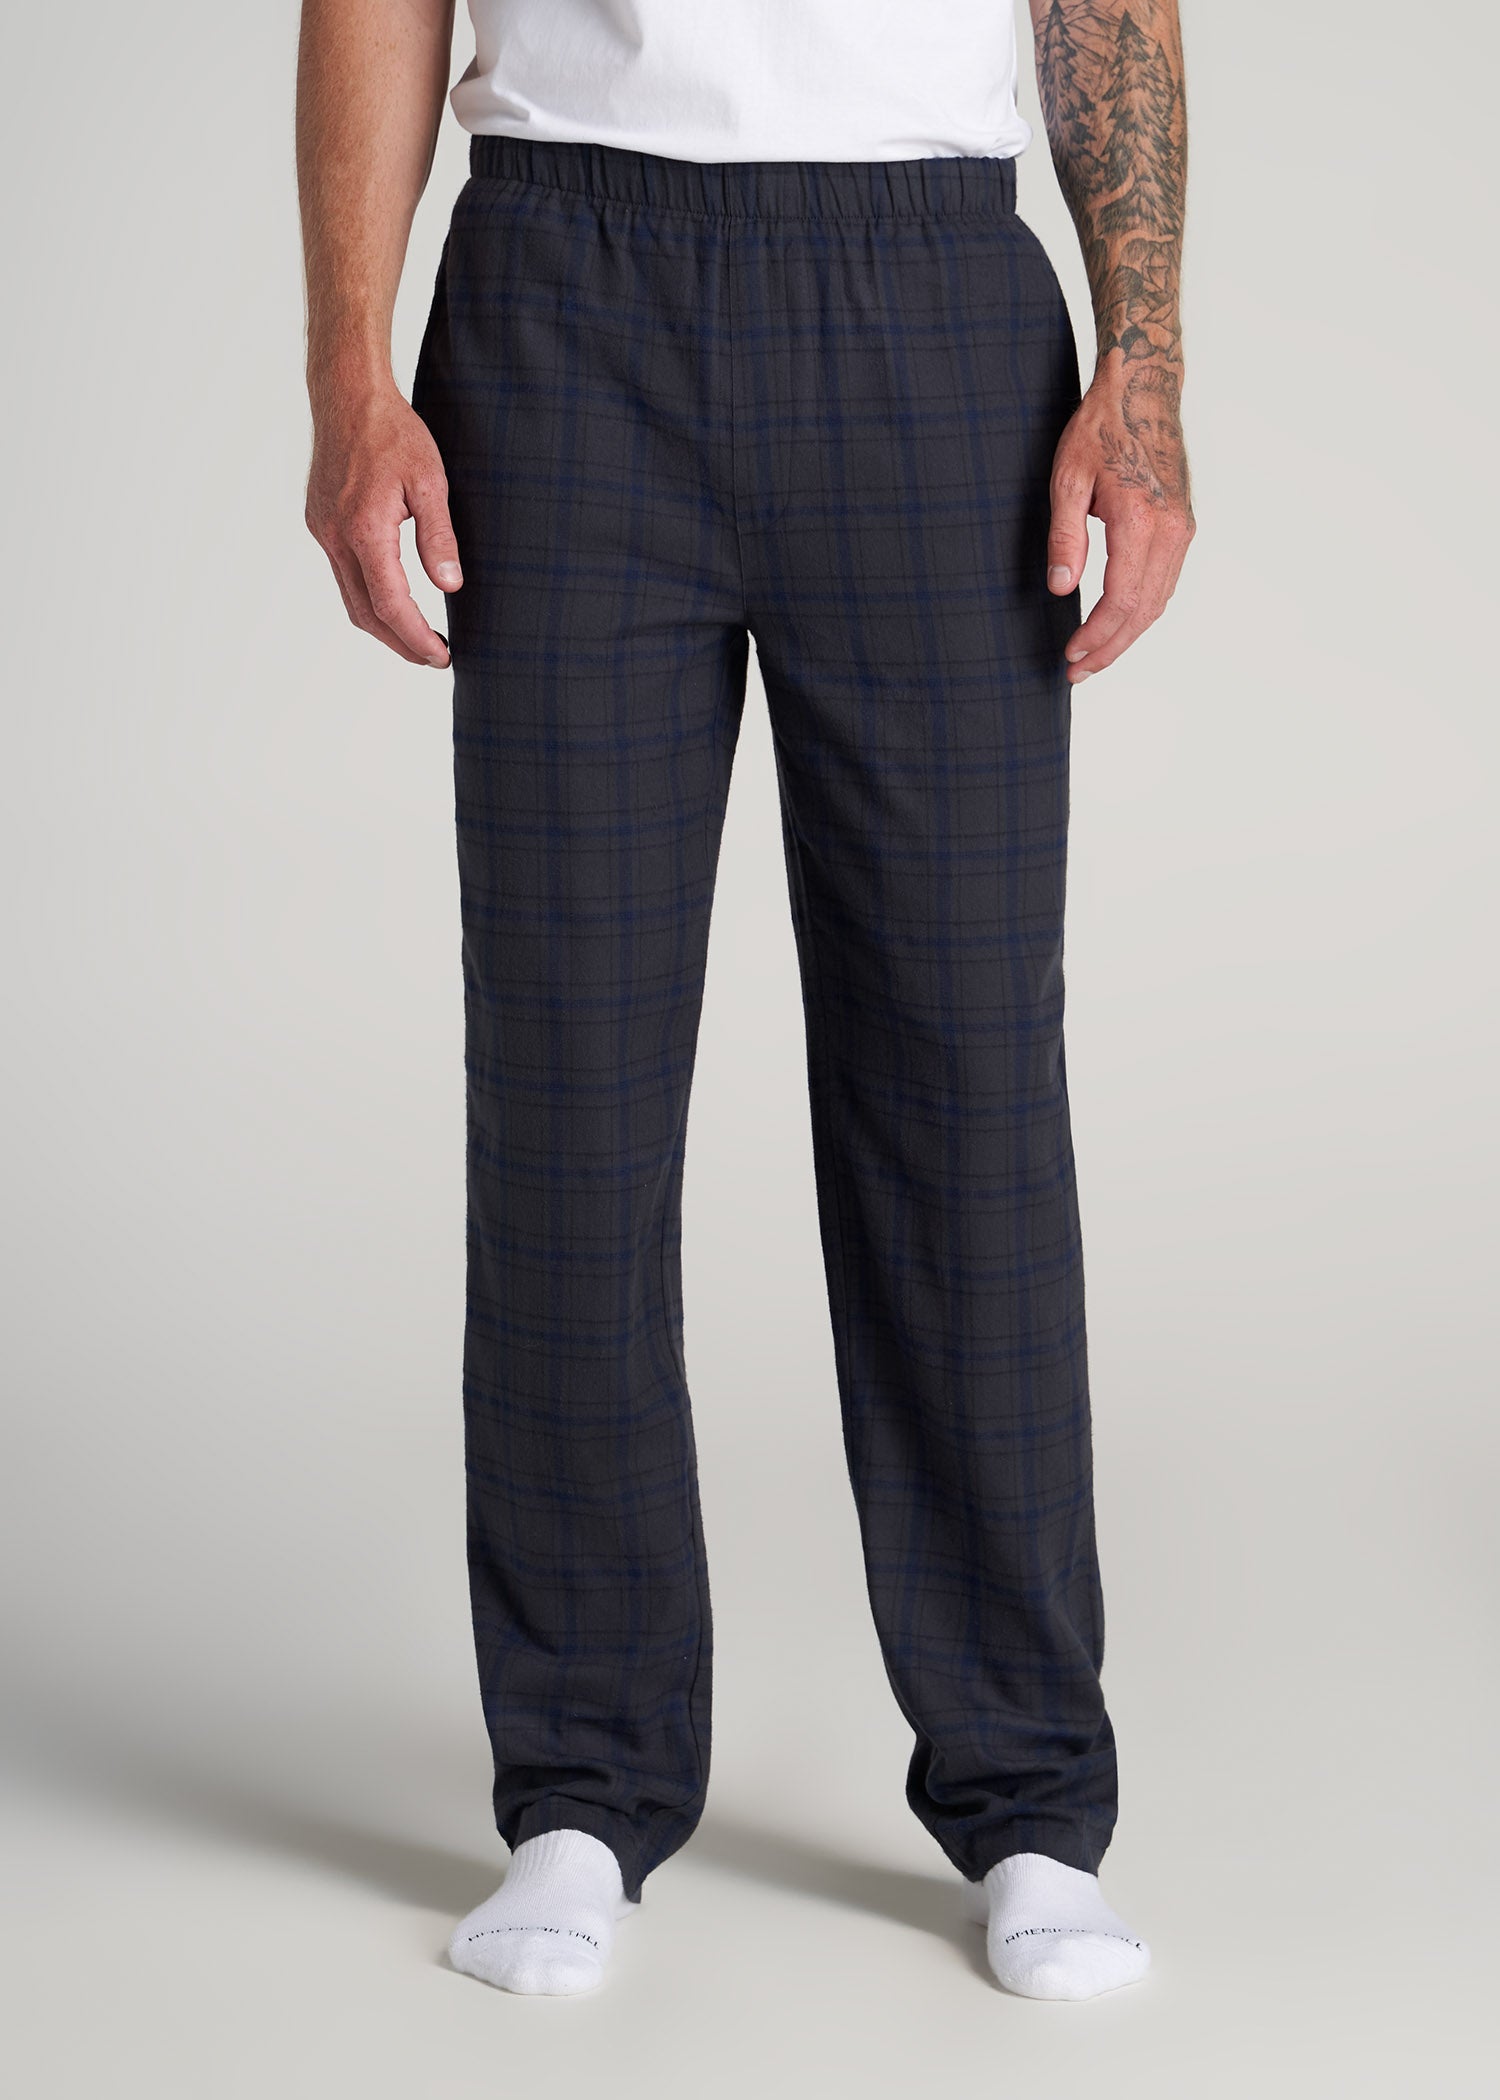 Lucky Brand Men's Sleepwear Pajamas Lounge Pants Size XL Black & White  Plaid